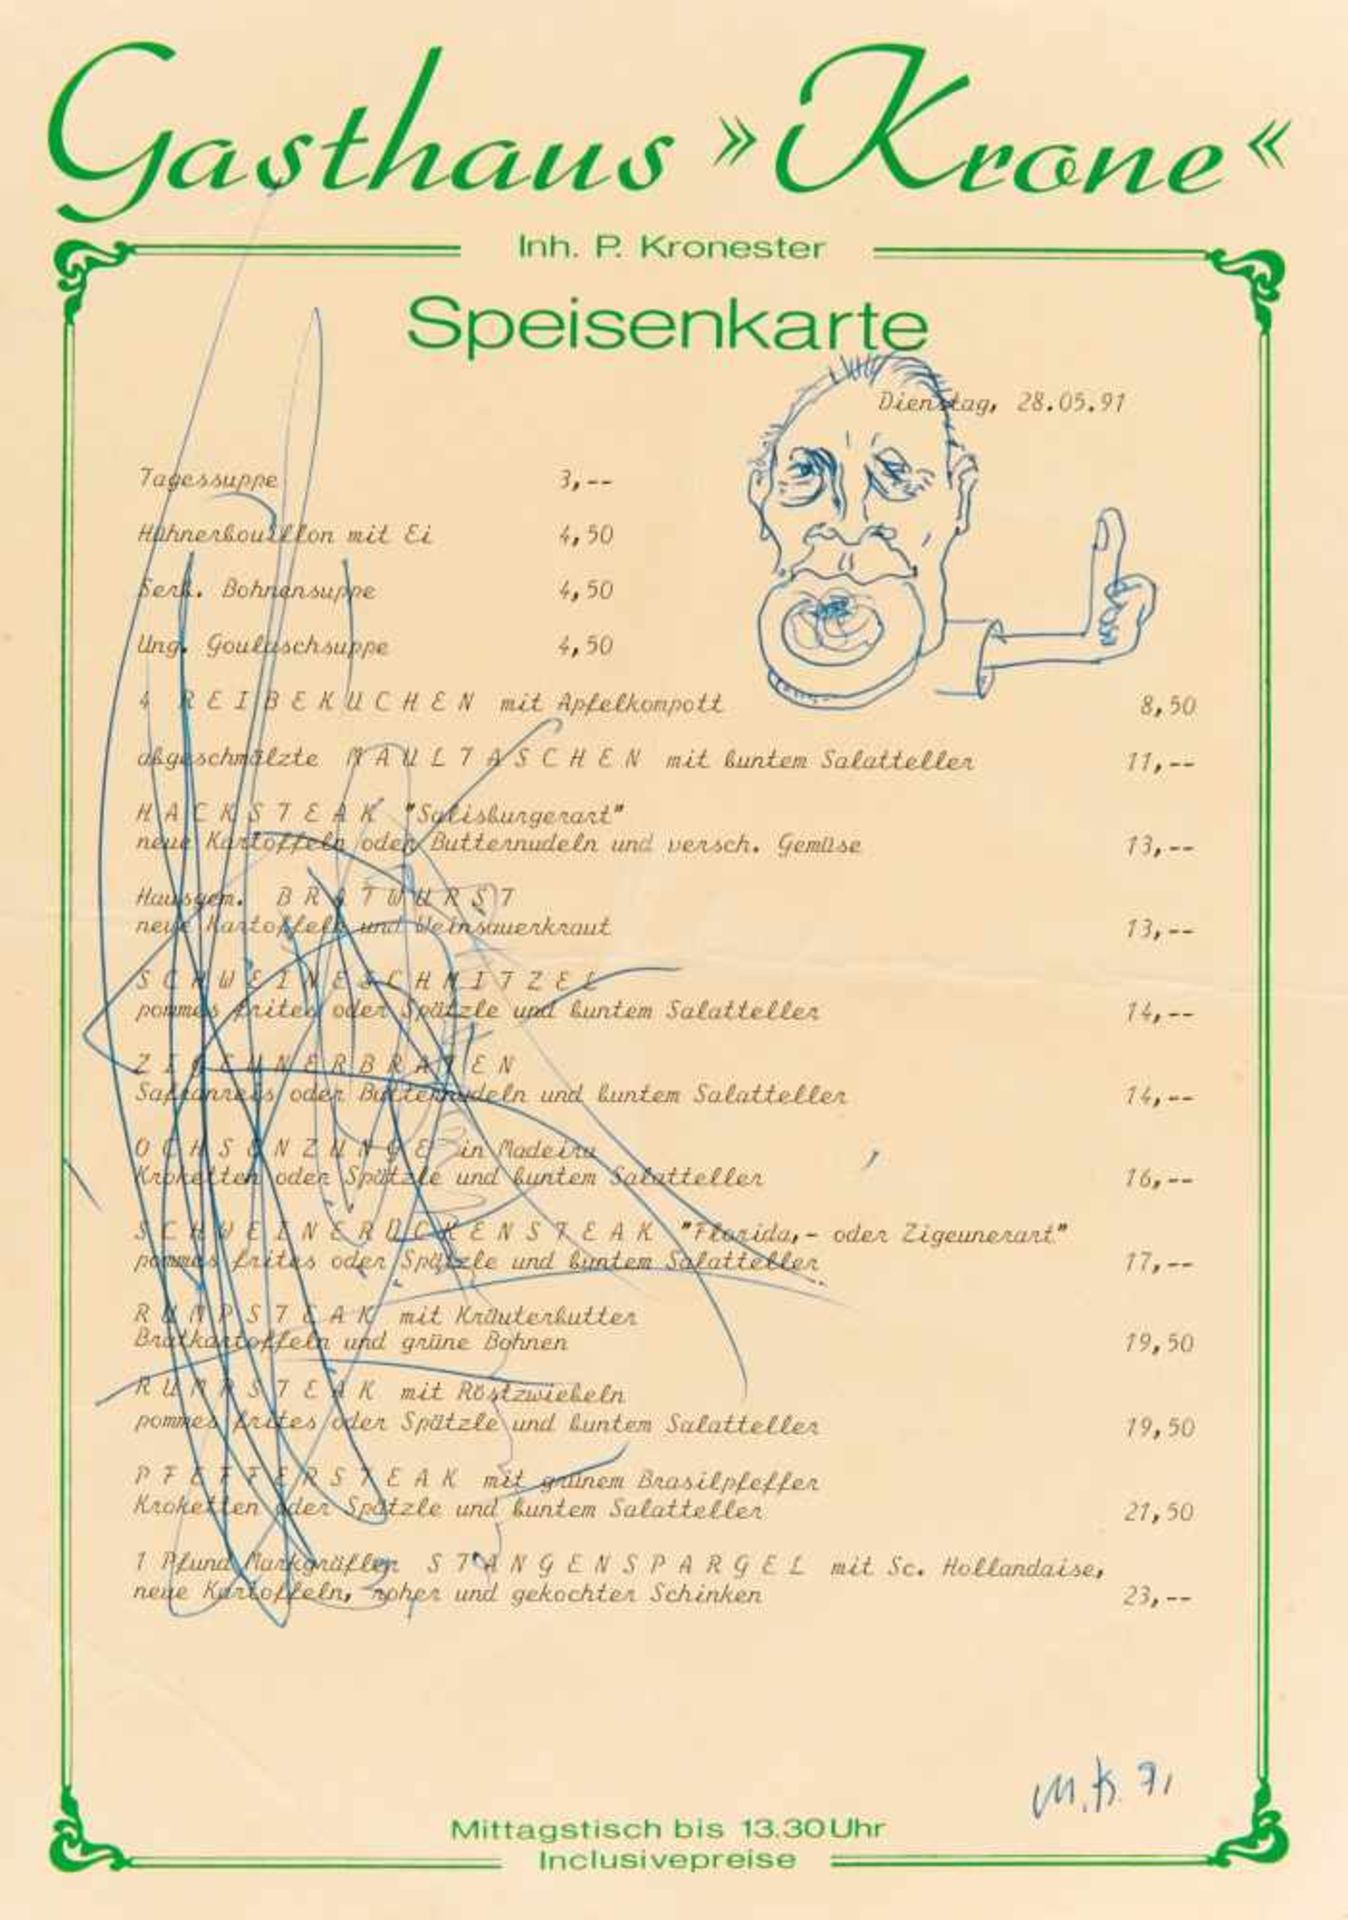 Kippenberger, Martin1953 Dortmund - 1997 ViennaUntitled. 1991. Biro drawing on Menu - Gasthaus Krone